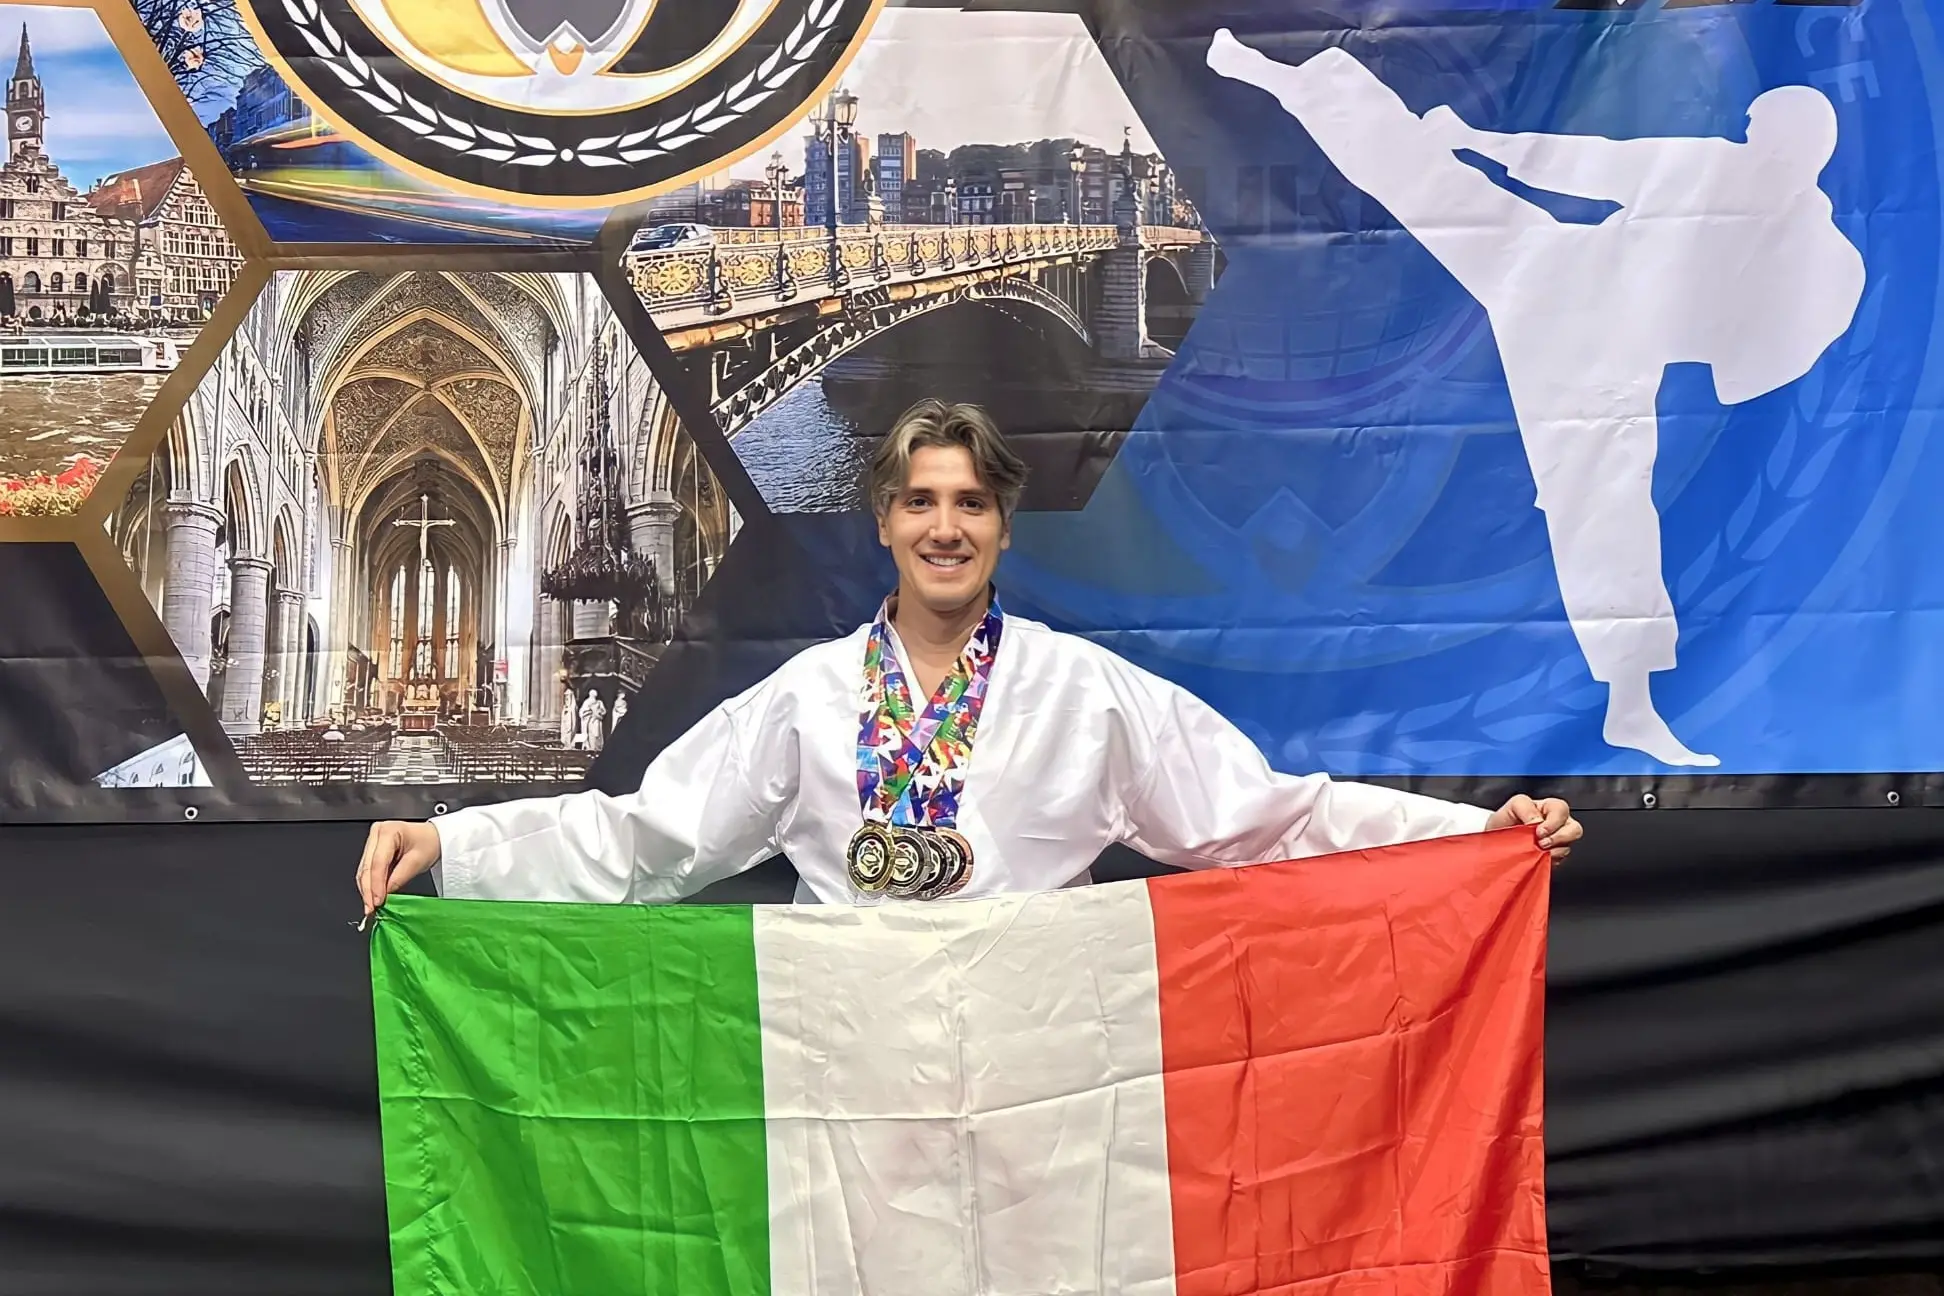 Gino Emanuele Melis con le medaglie conquistate al Campionato Europeo WKA (foto concessa)